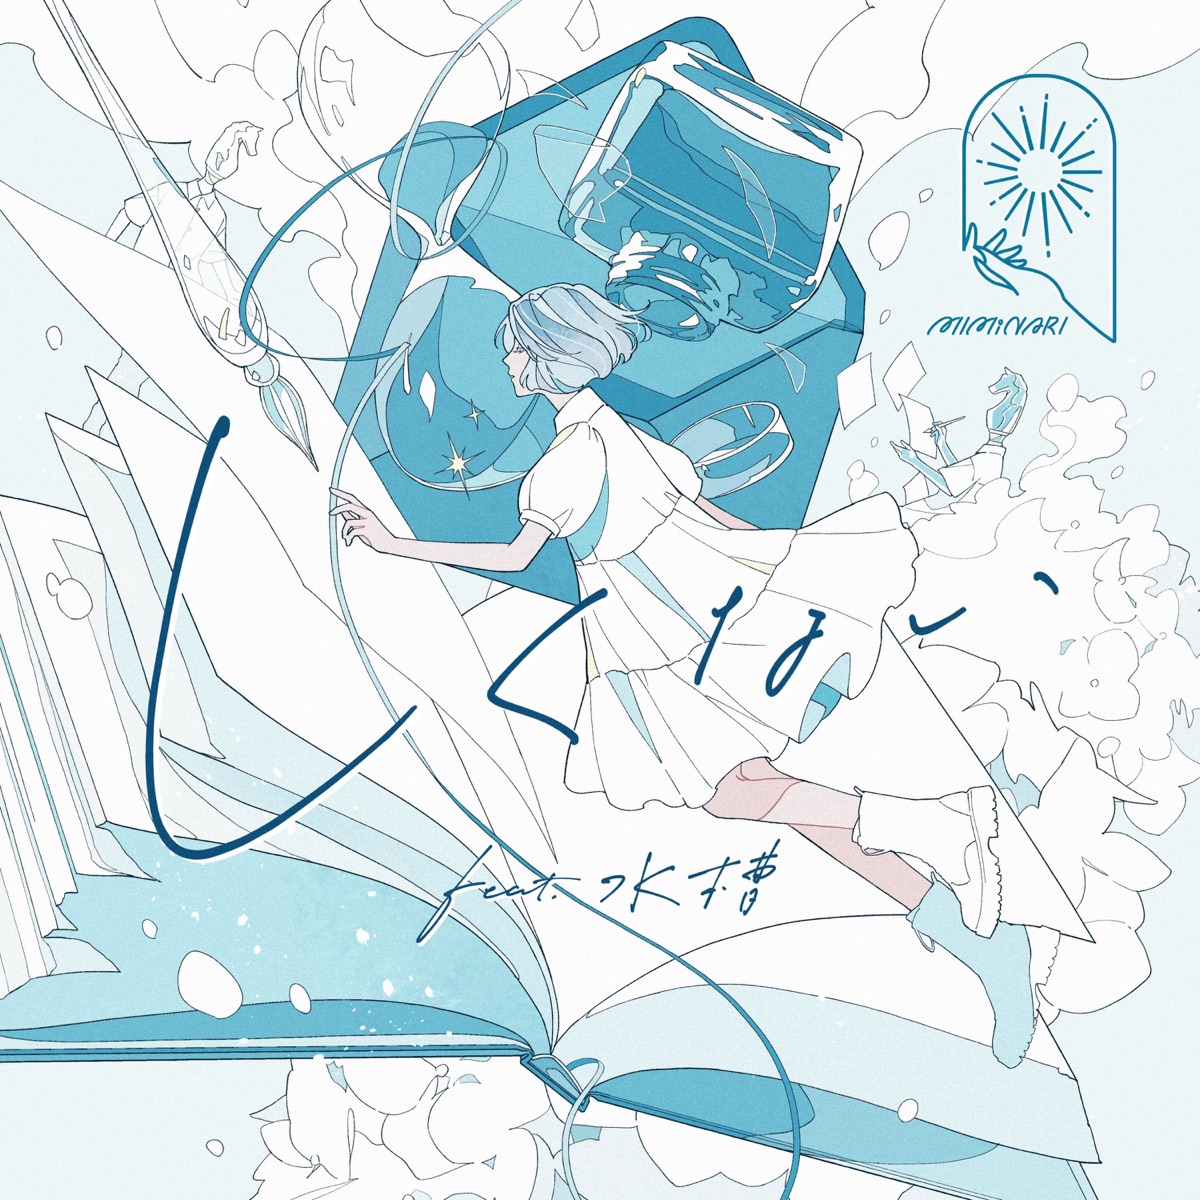 Cover art for『MIMiNARI - Shikunai (feat. suisoh)』from the release『Shikunai (feat. suisoh)』